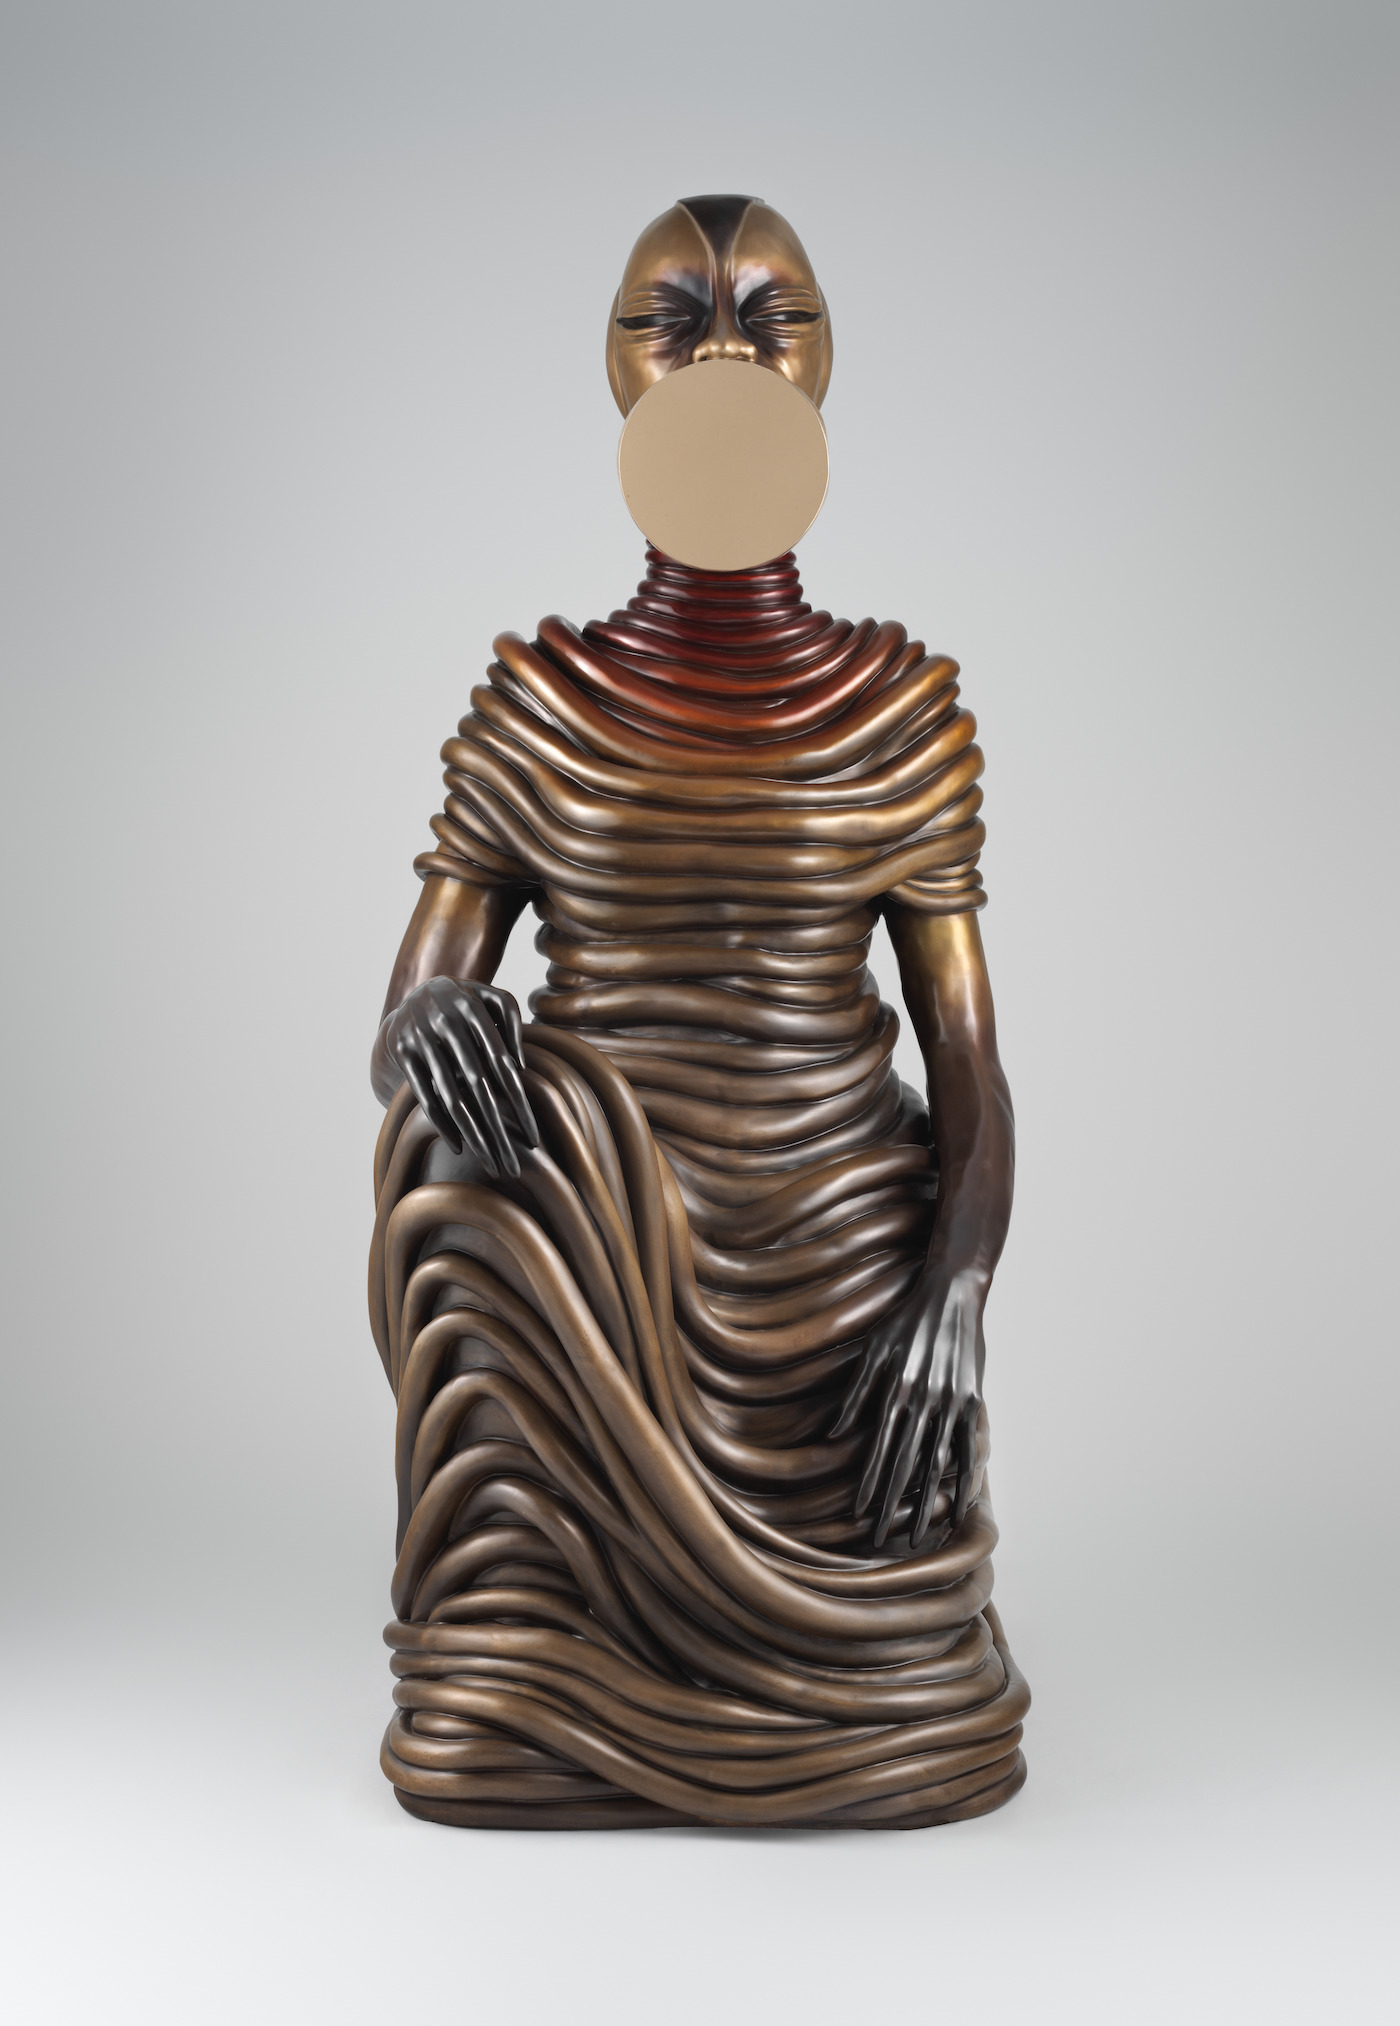 Bronze Sculptures of Regal African Women by Wangechi Mutu Make History at the Metropolitan Museum